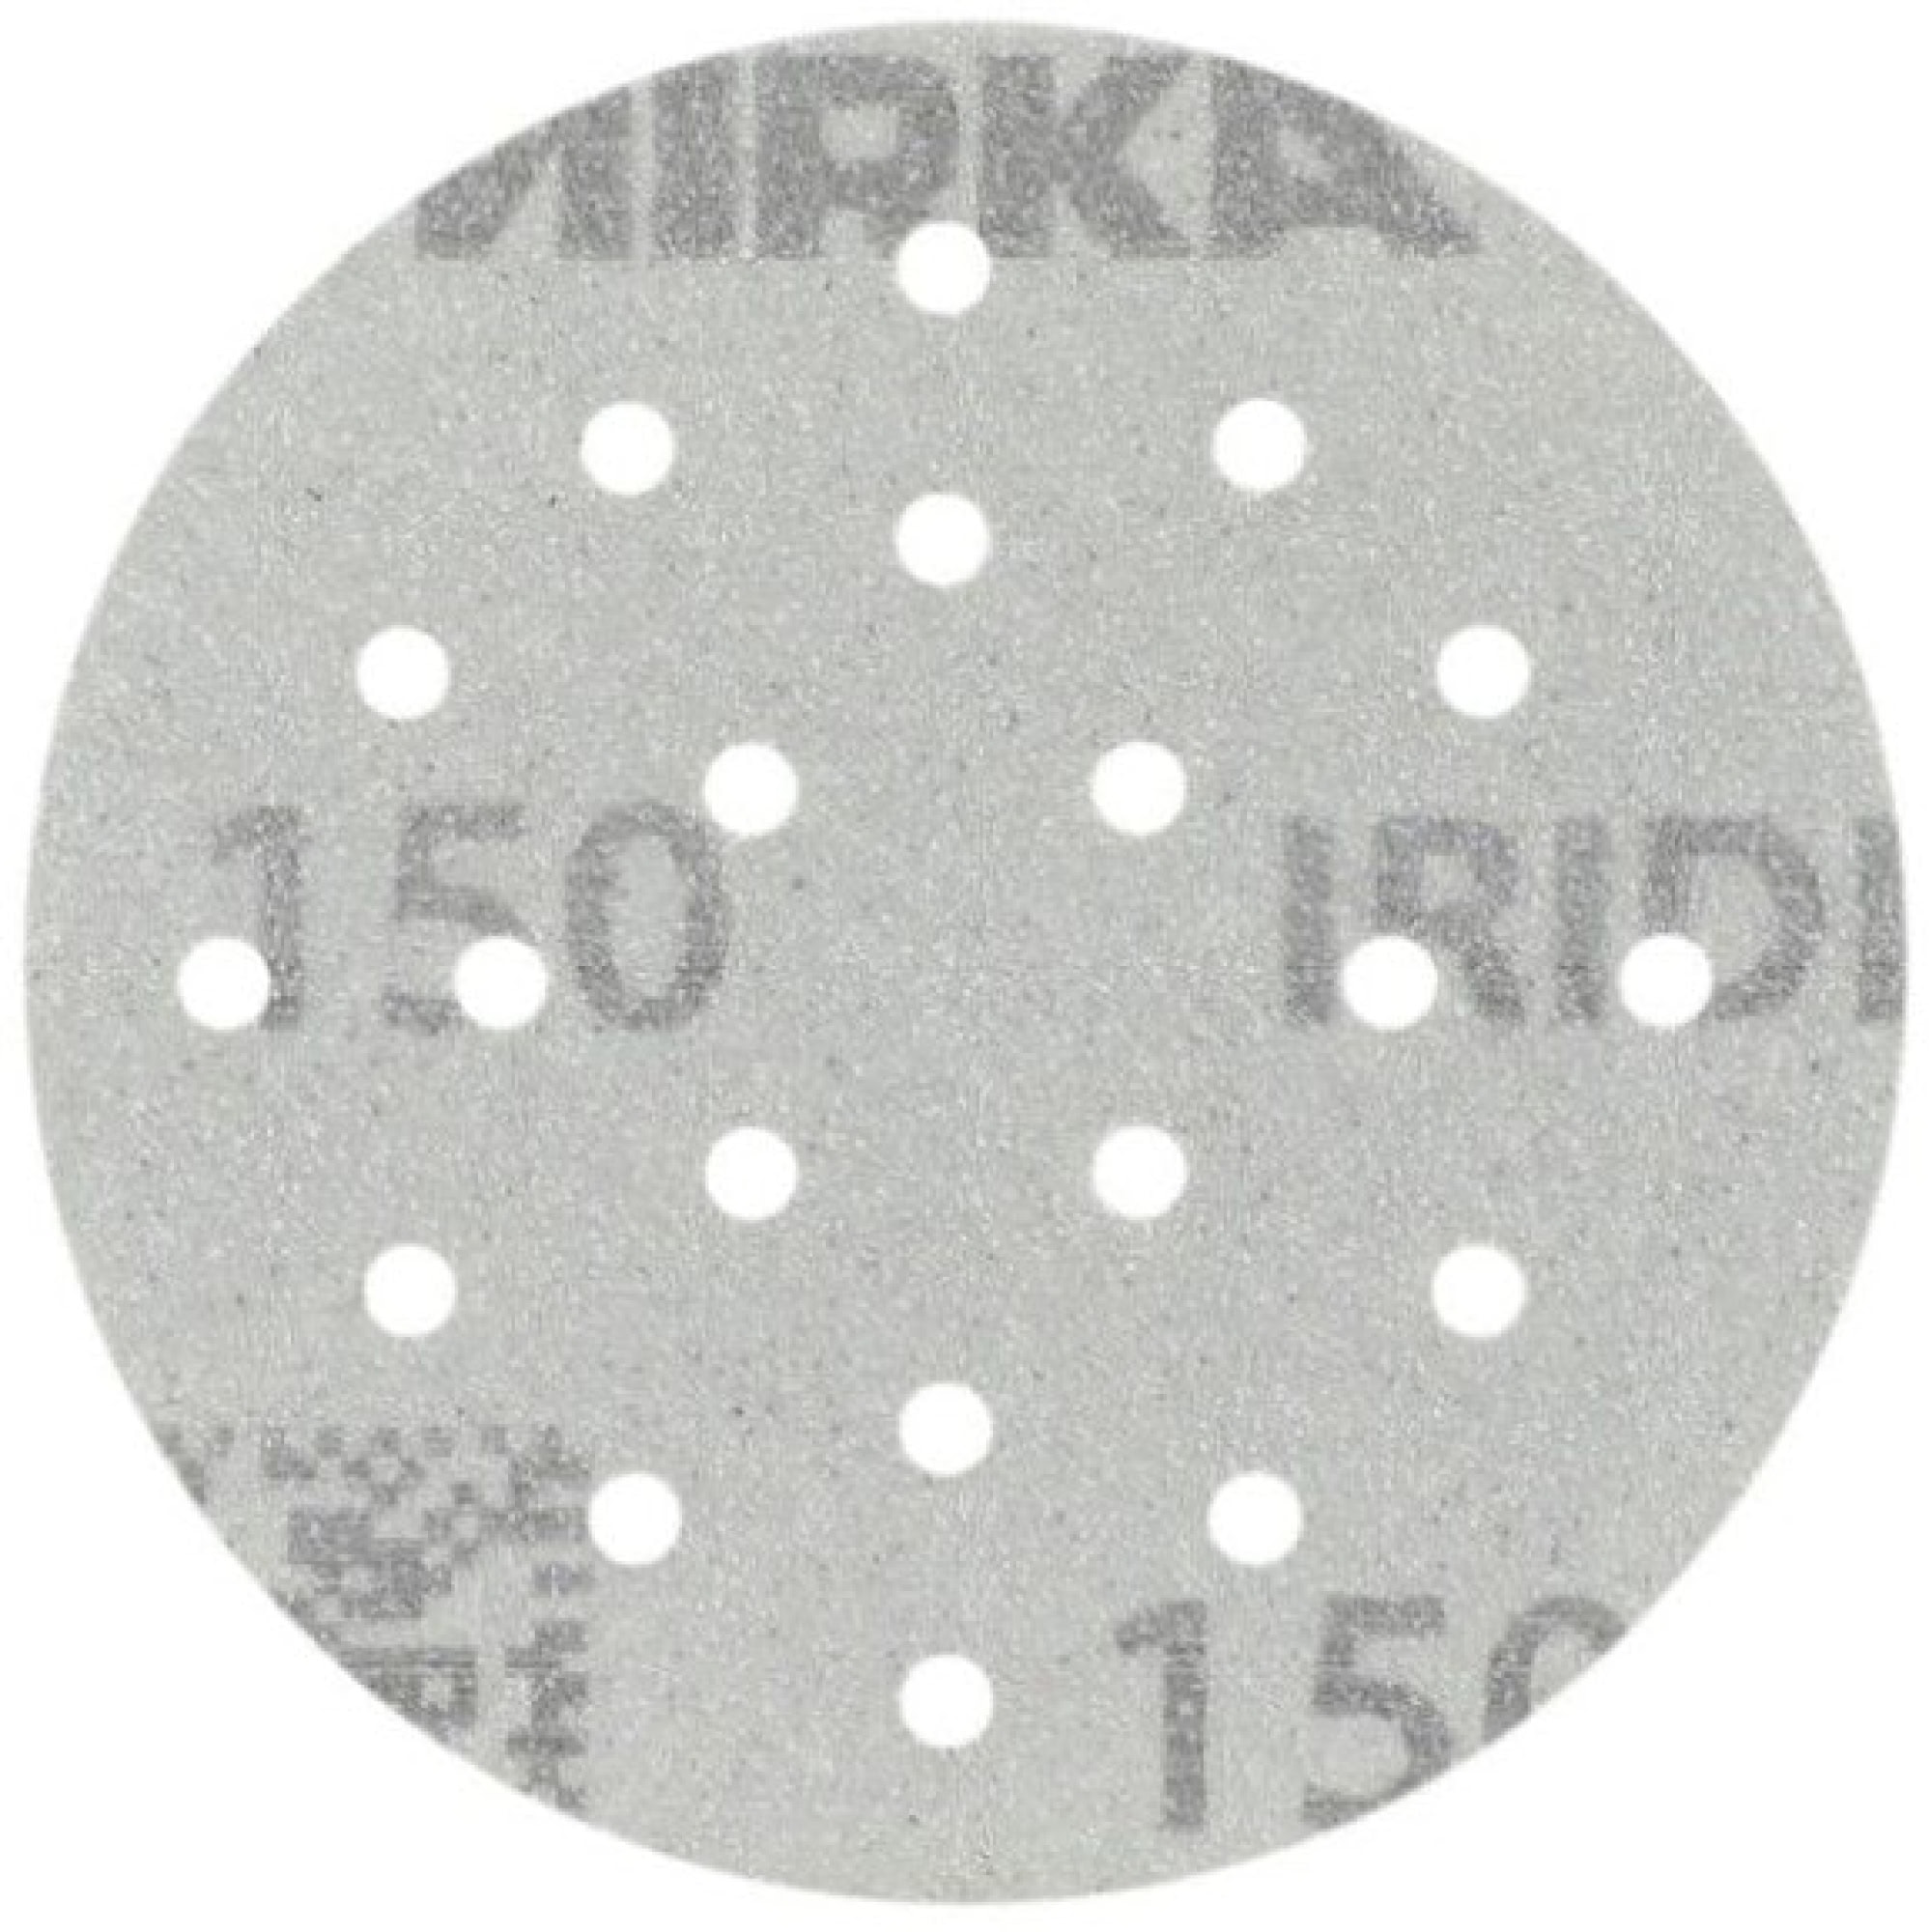 Mirka® Iridium® 246JU05080, Ø 77 mm, P80, Multilochung, Kletthaftend, Schleifscheibe mit Keramik- und Aluminiumkorn